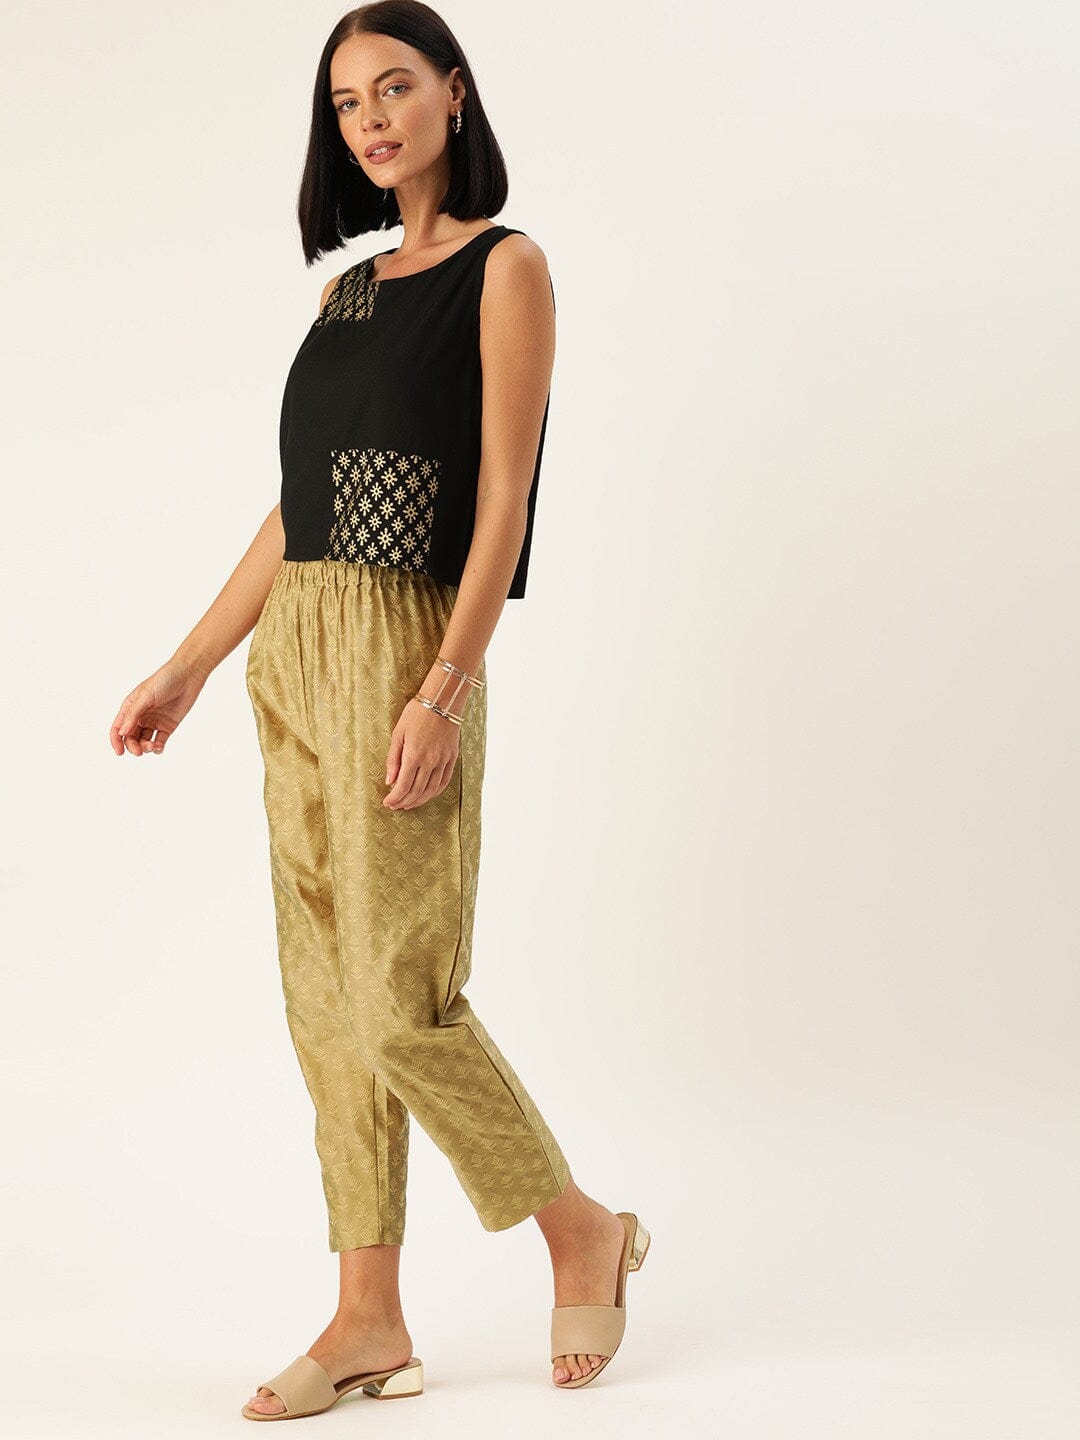 Women's Black & Gold-Toned Printed Top with Trousers - Varanga